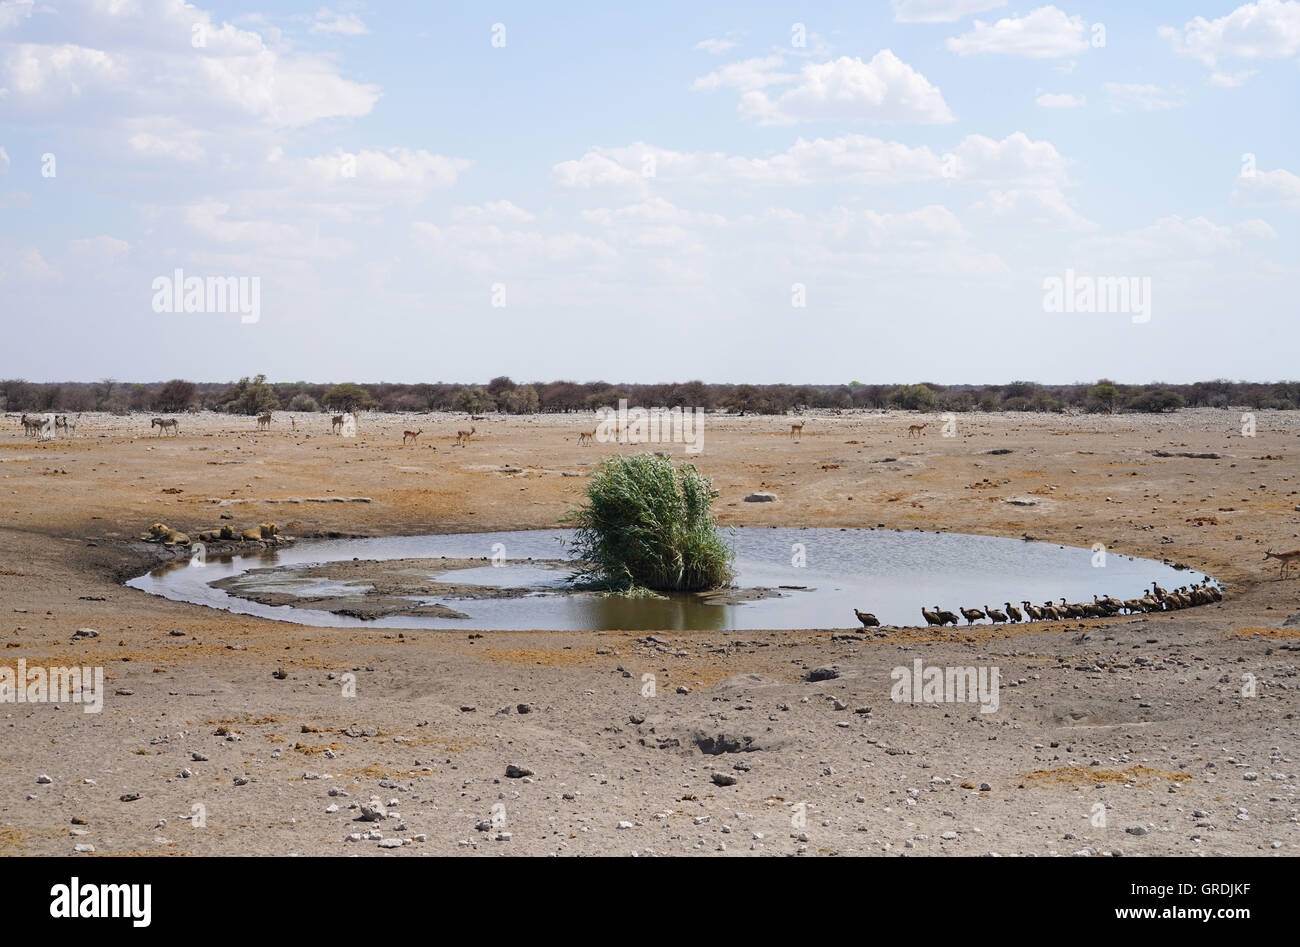 Waterhole With Lots Of Wild Animlas, Namibia Stock Photo